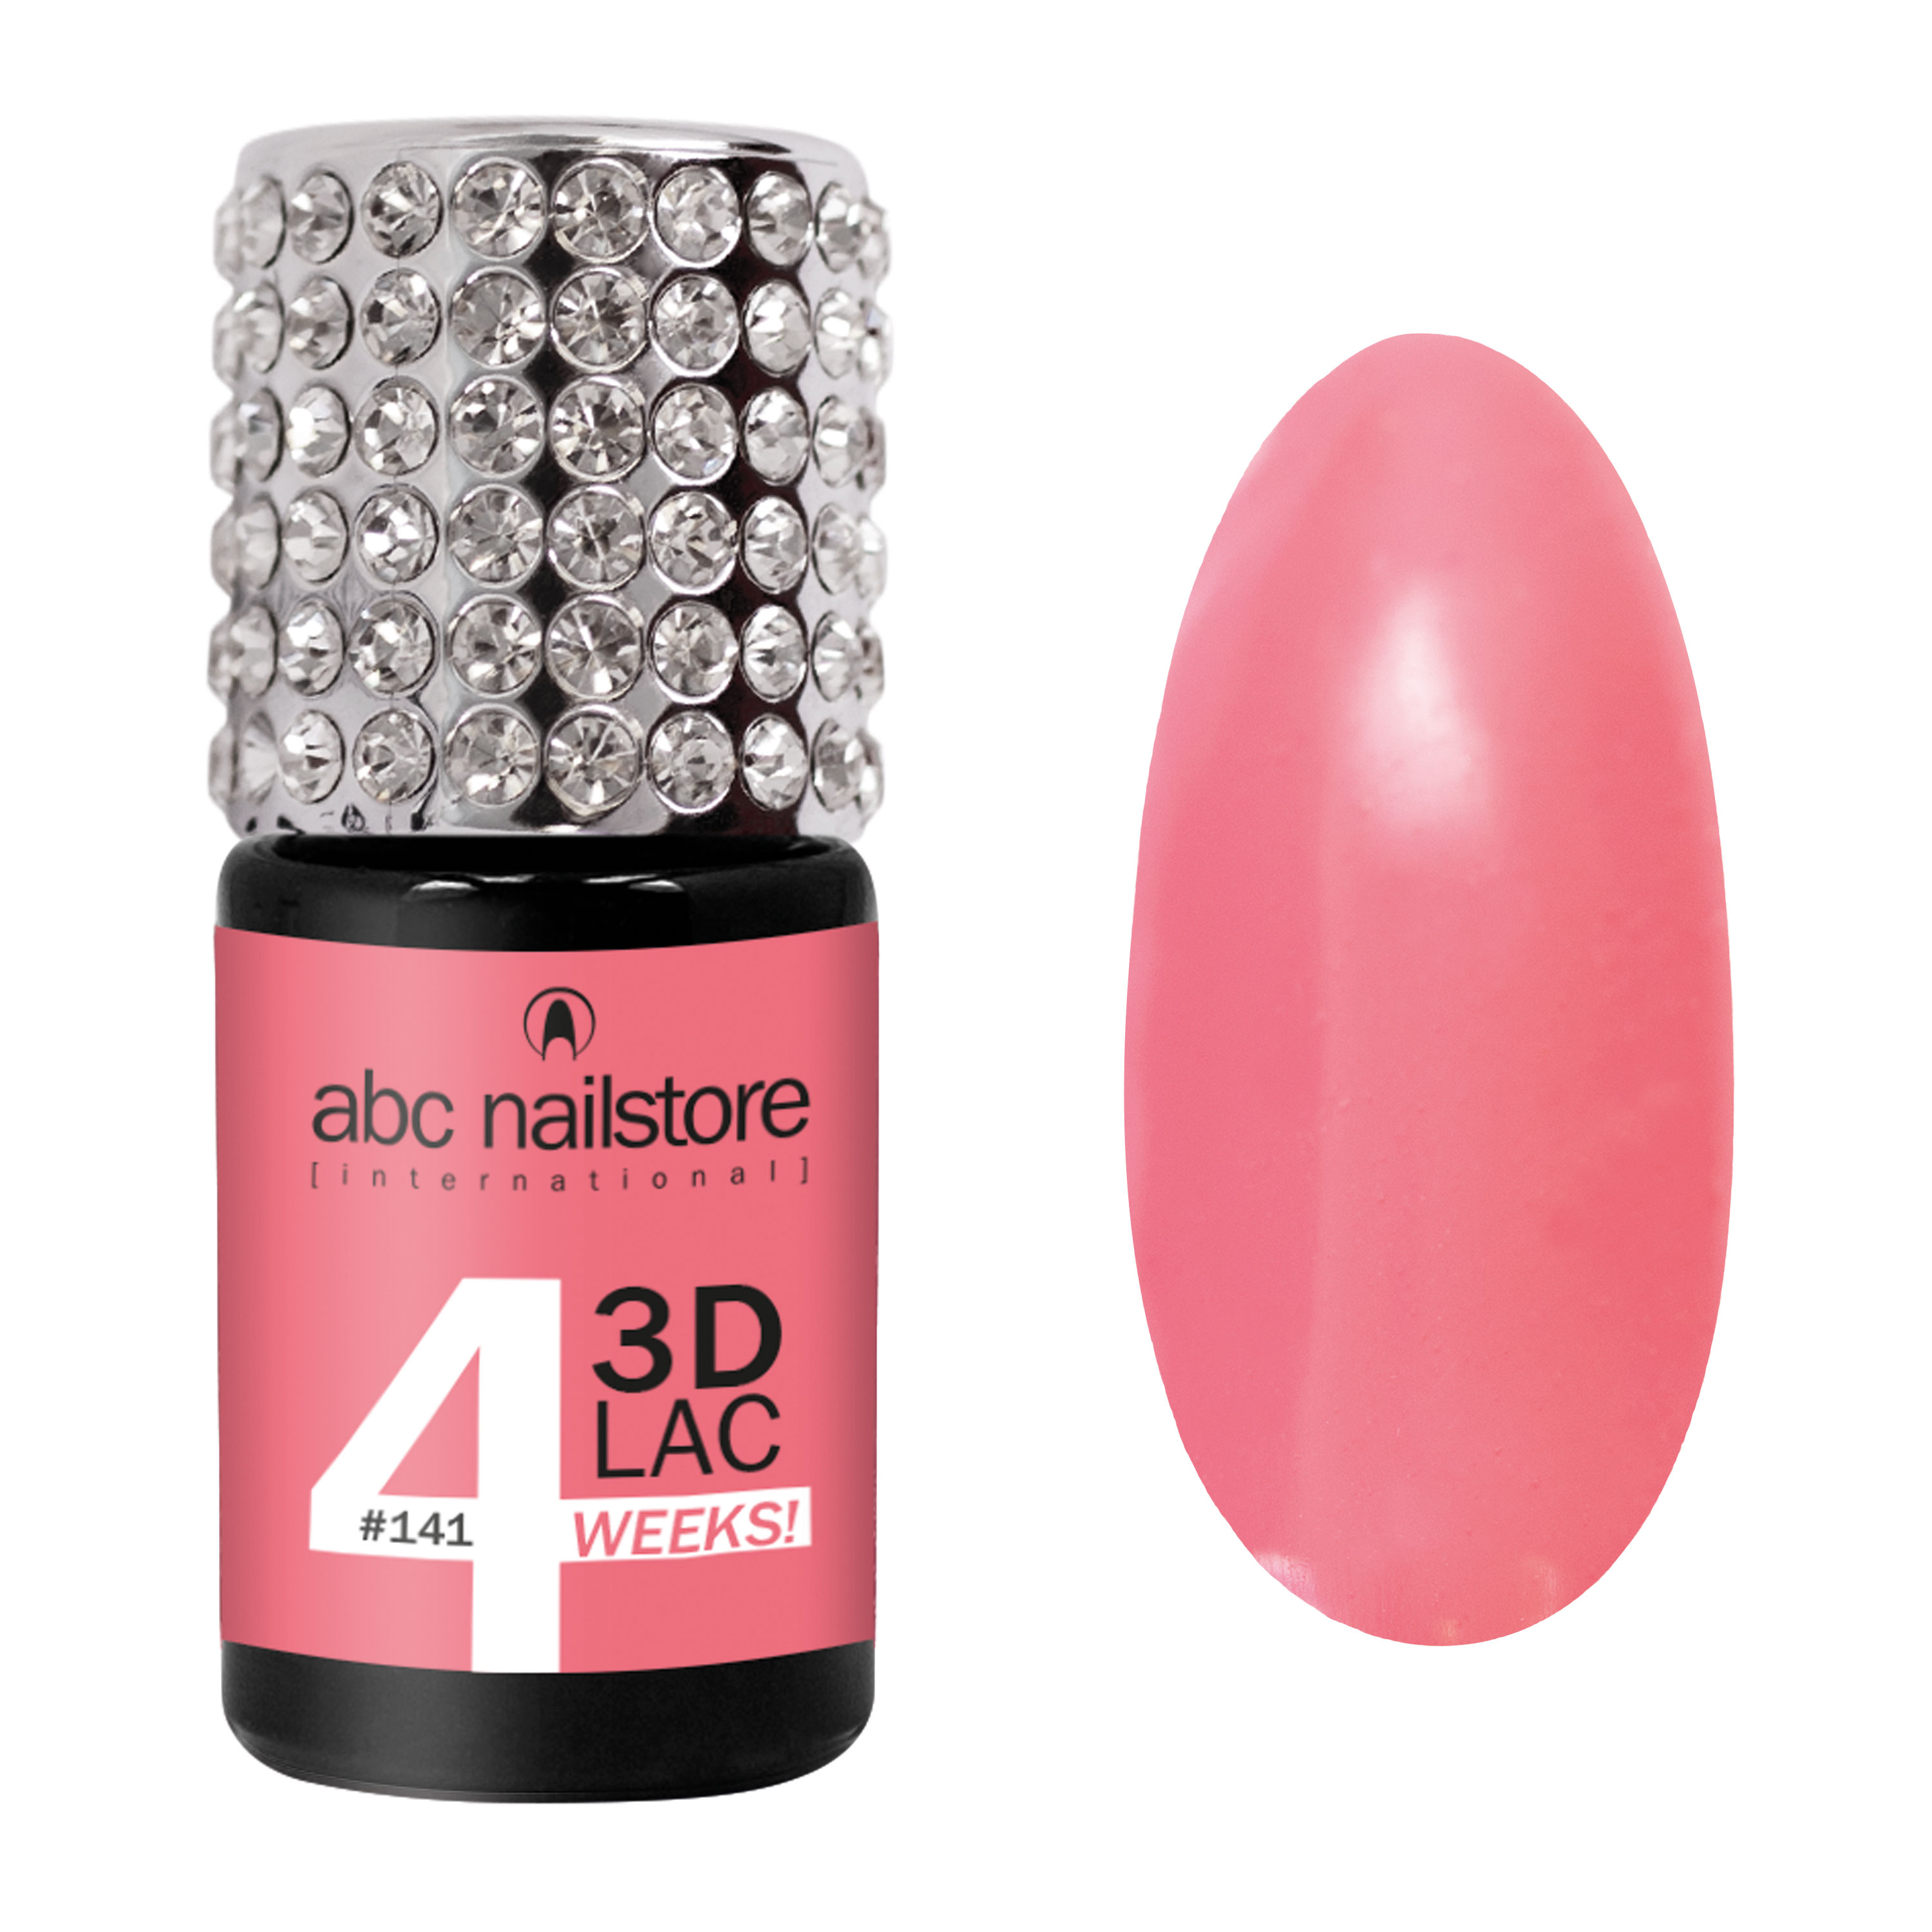 abc nailstore 3DLac 4WEEKS, fast friend #141, 8 ml